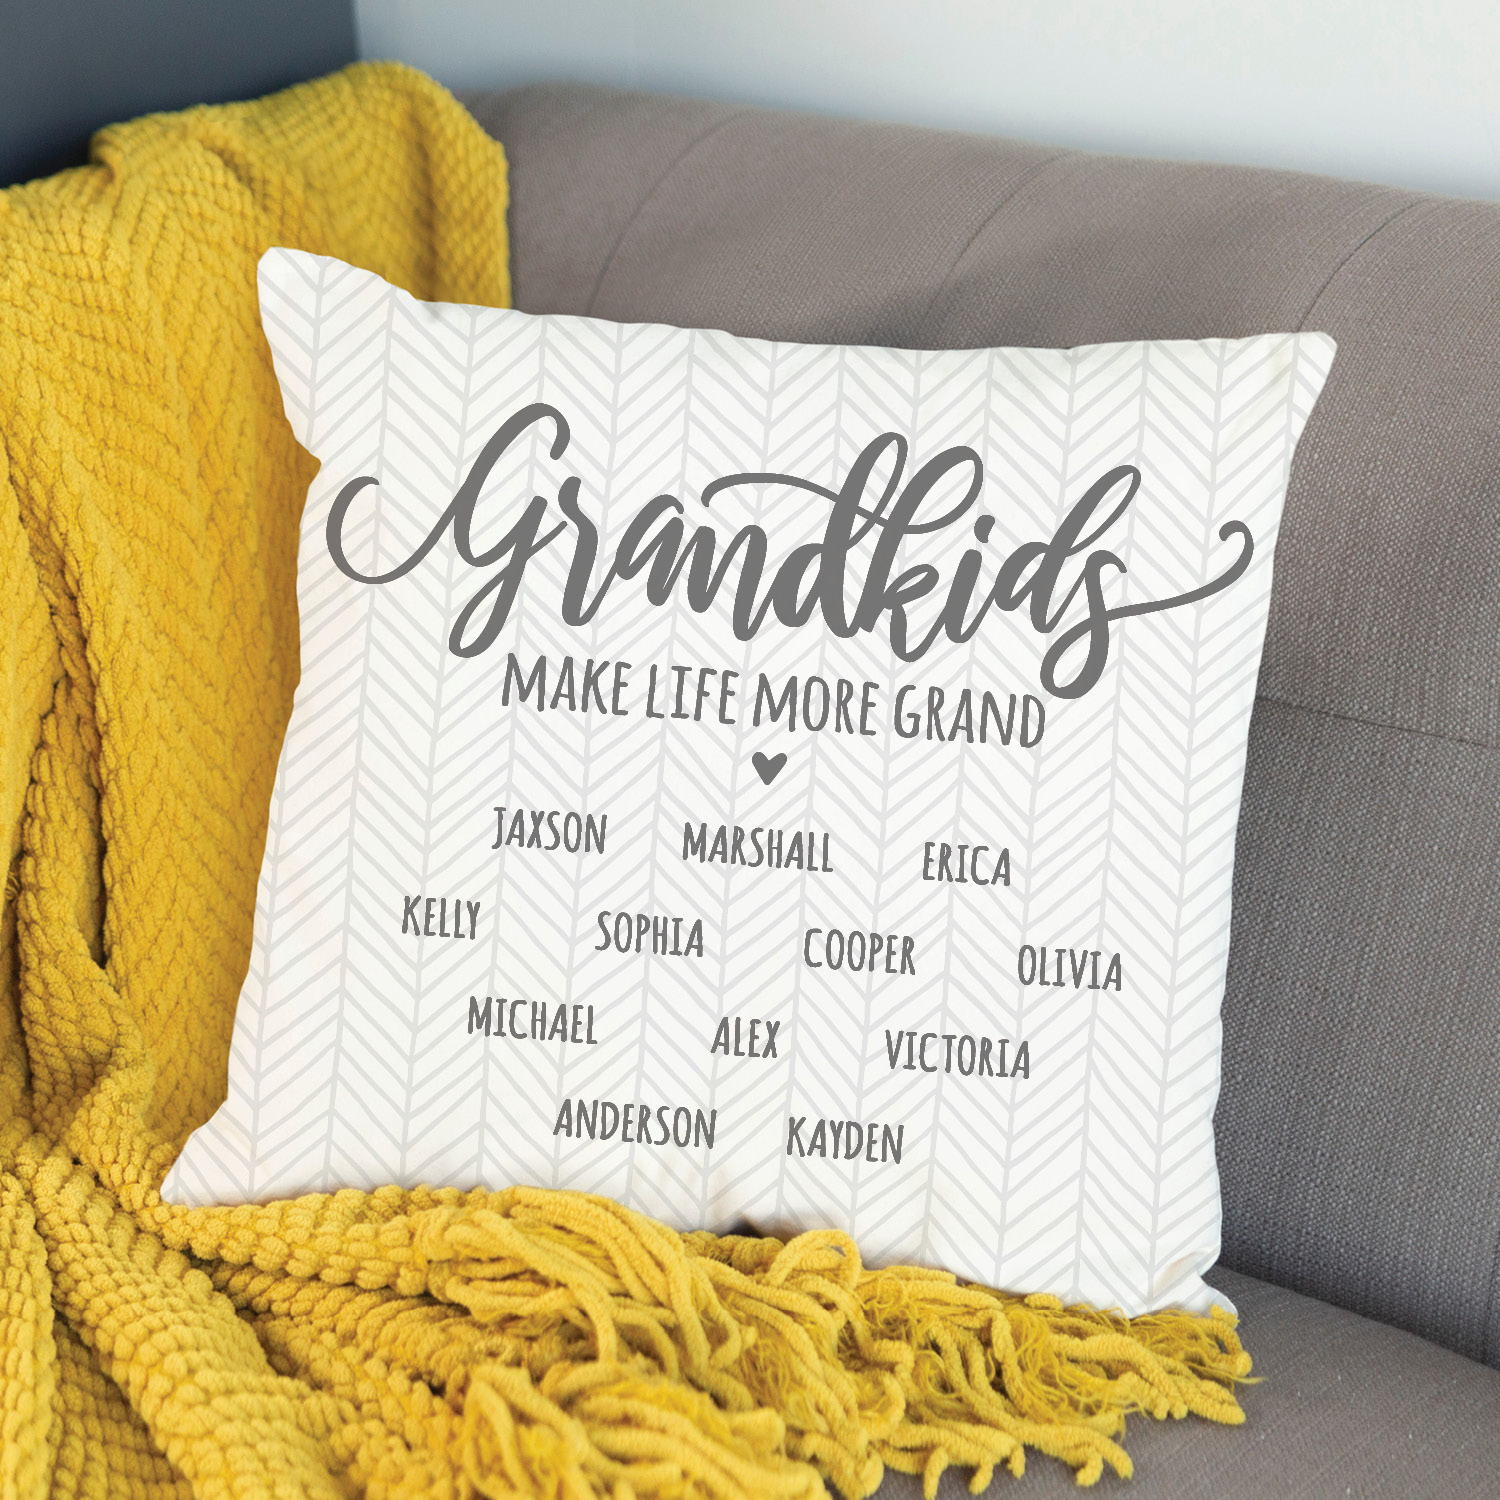 Grandkids throw pillow